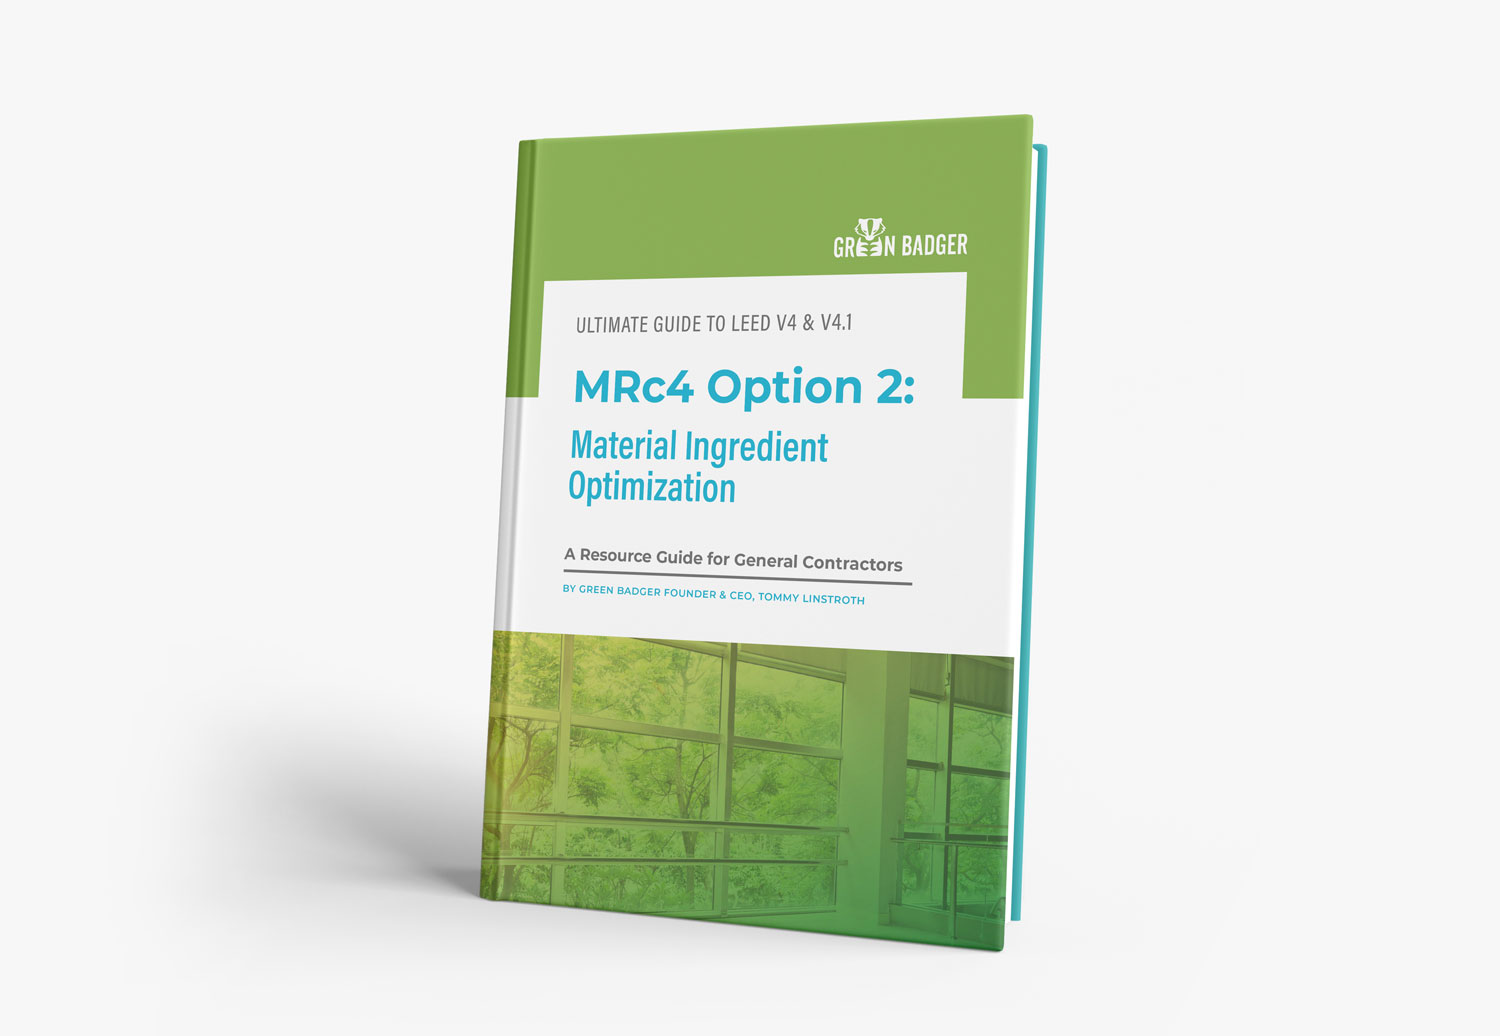 MRc4 Option 2 Material Ingredient Optimization